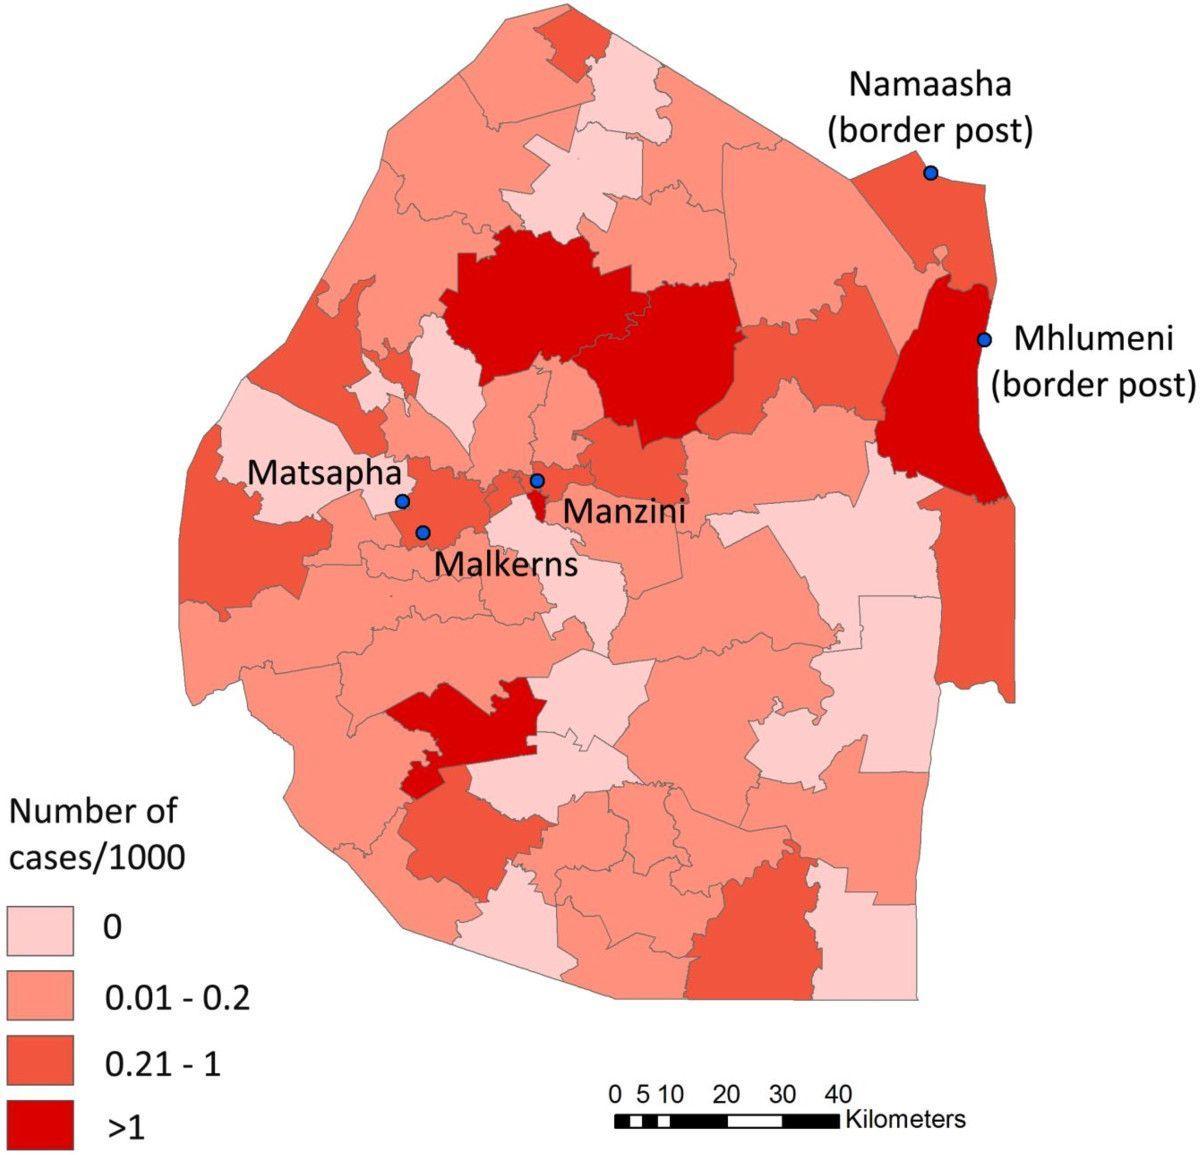 Žemėlapis Svazilandas maliarija